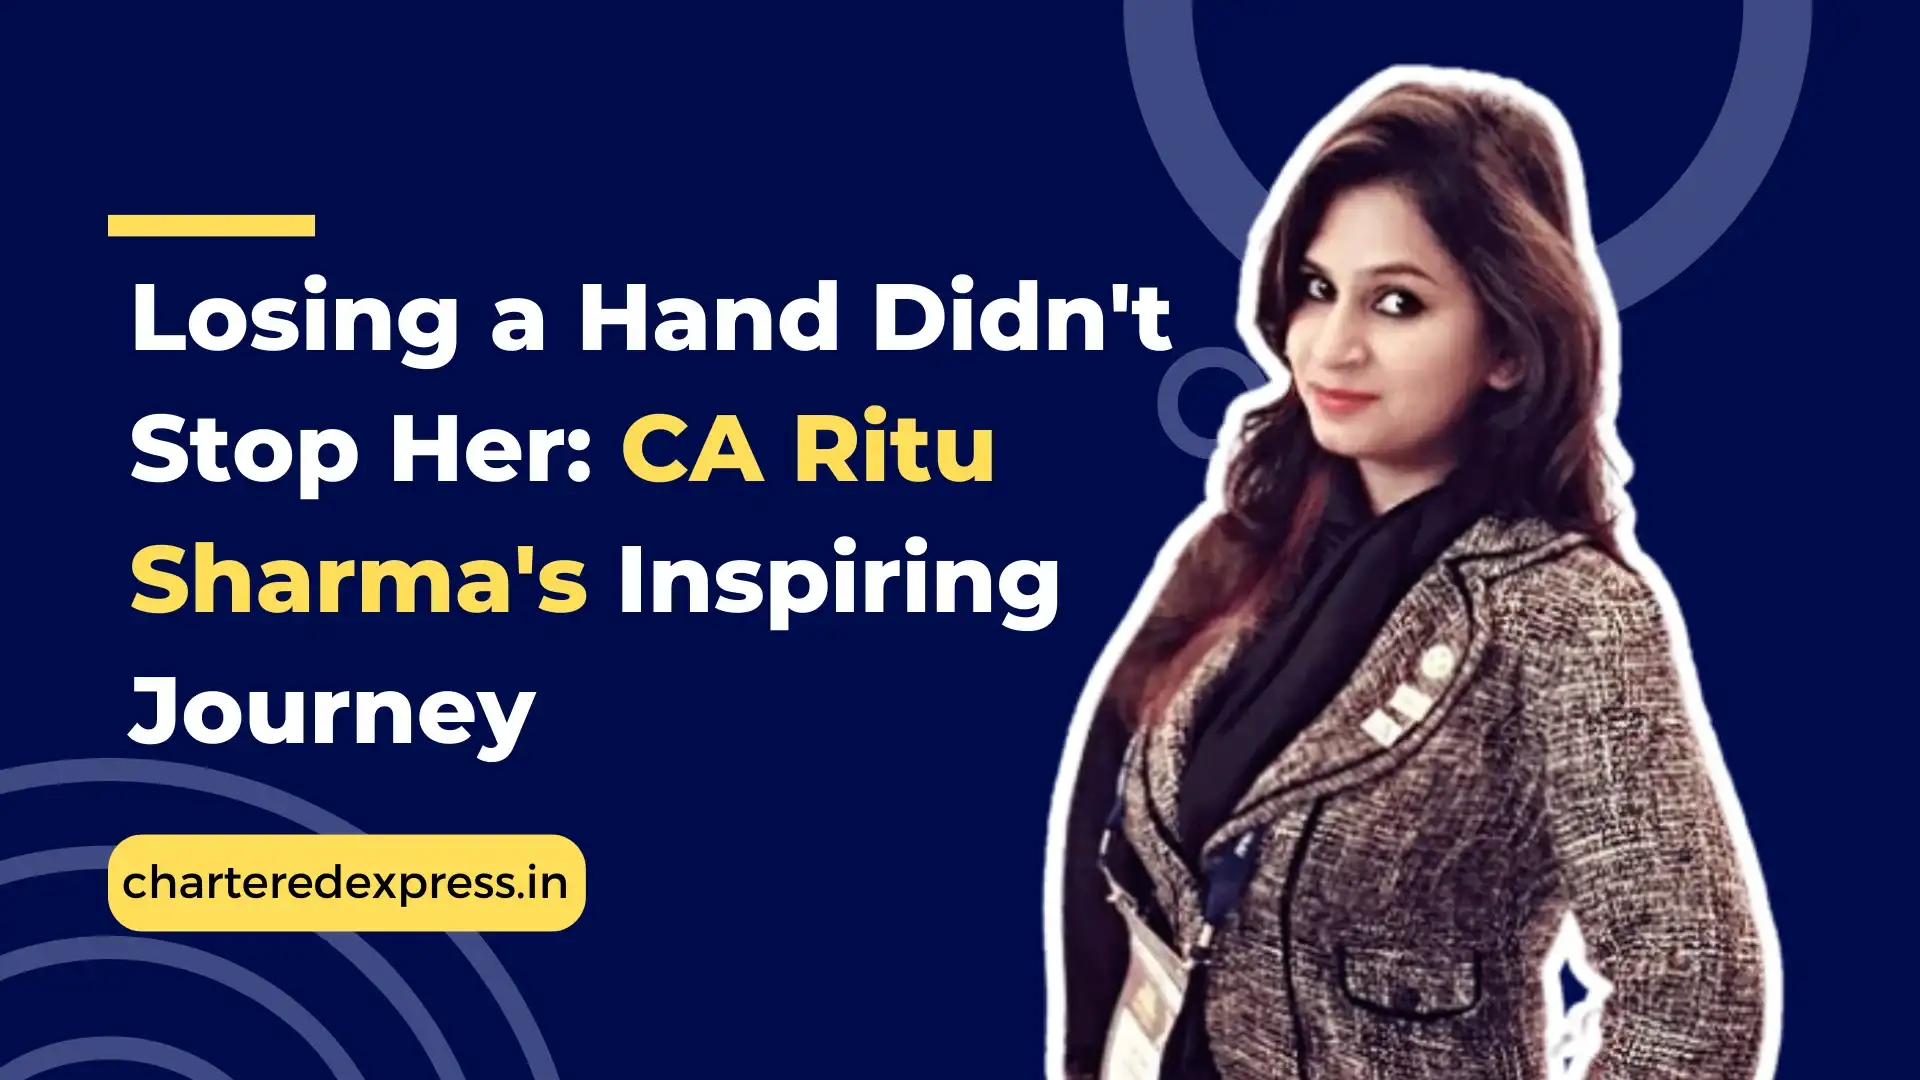 Losing a hand didn't stop her ca ritu sharma's inspiring journey